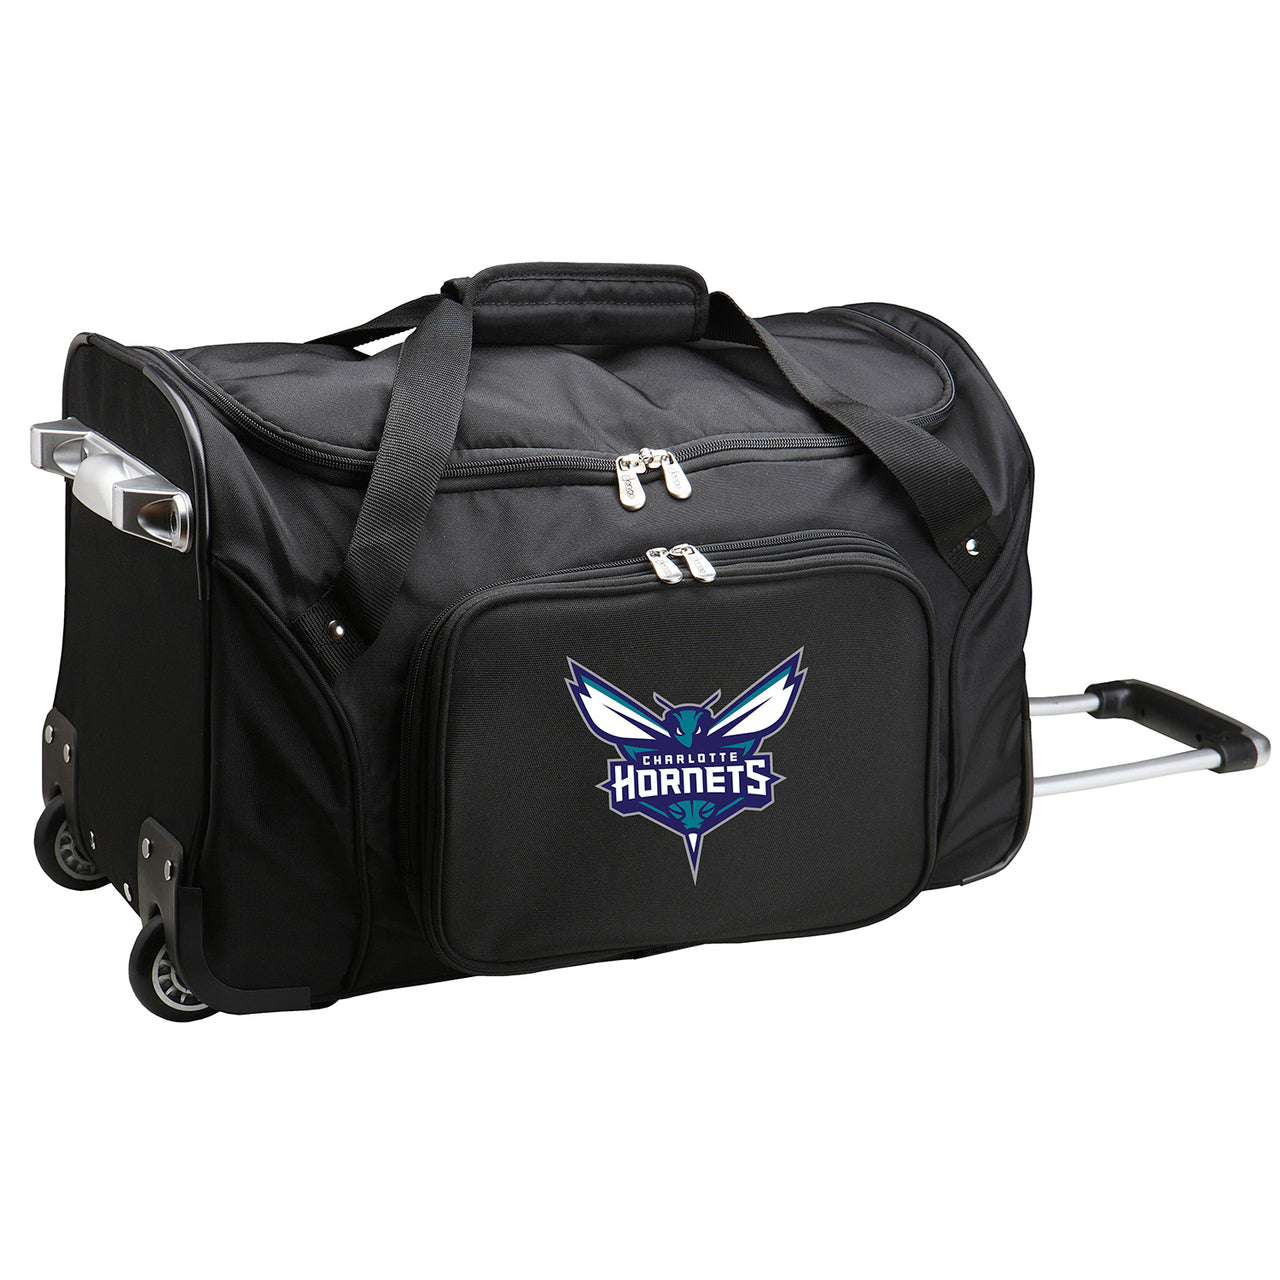 NBA Charlotte Hornets Luggage | NBA Charlotte Hornets Wheeled Carry On Luggage